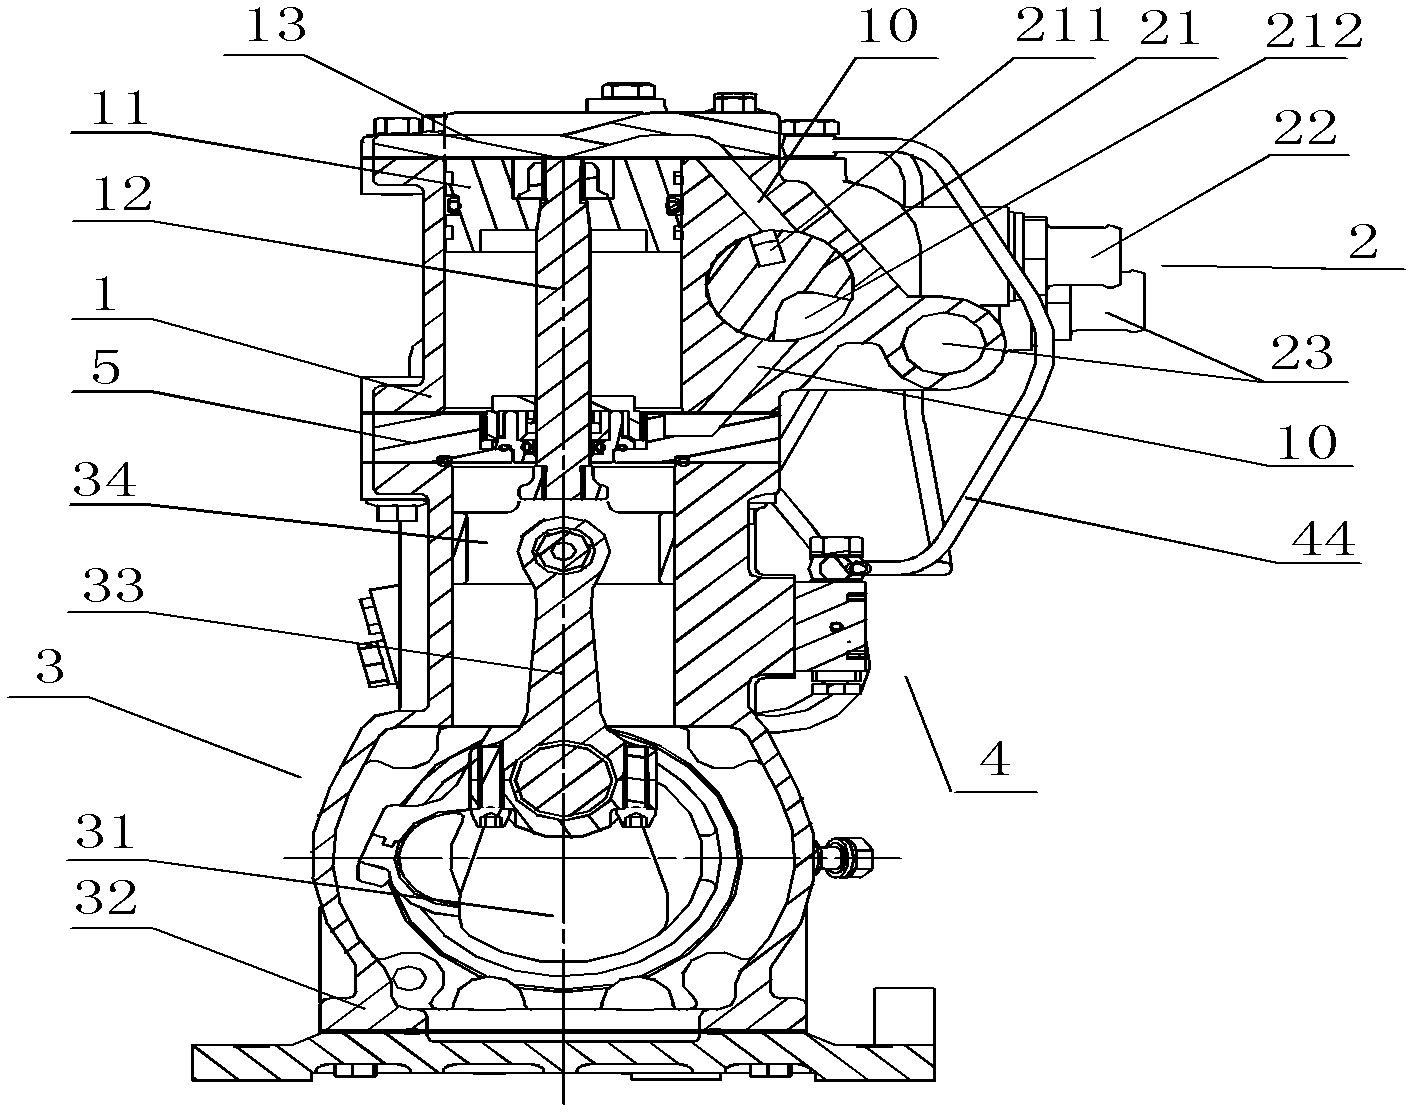 Steam motor